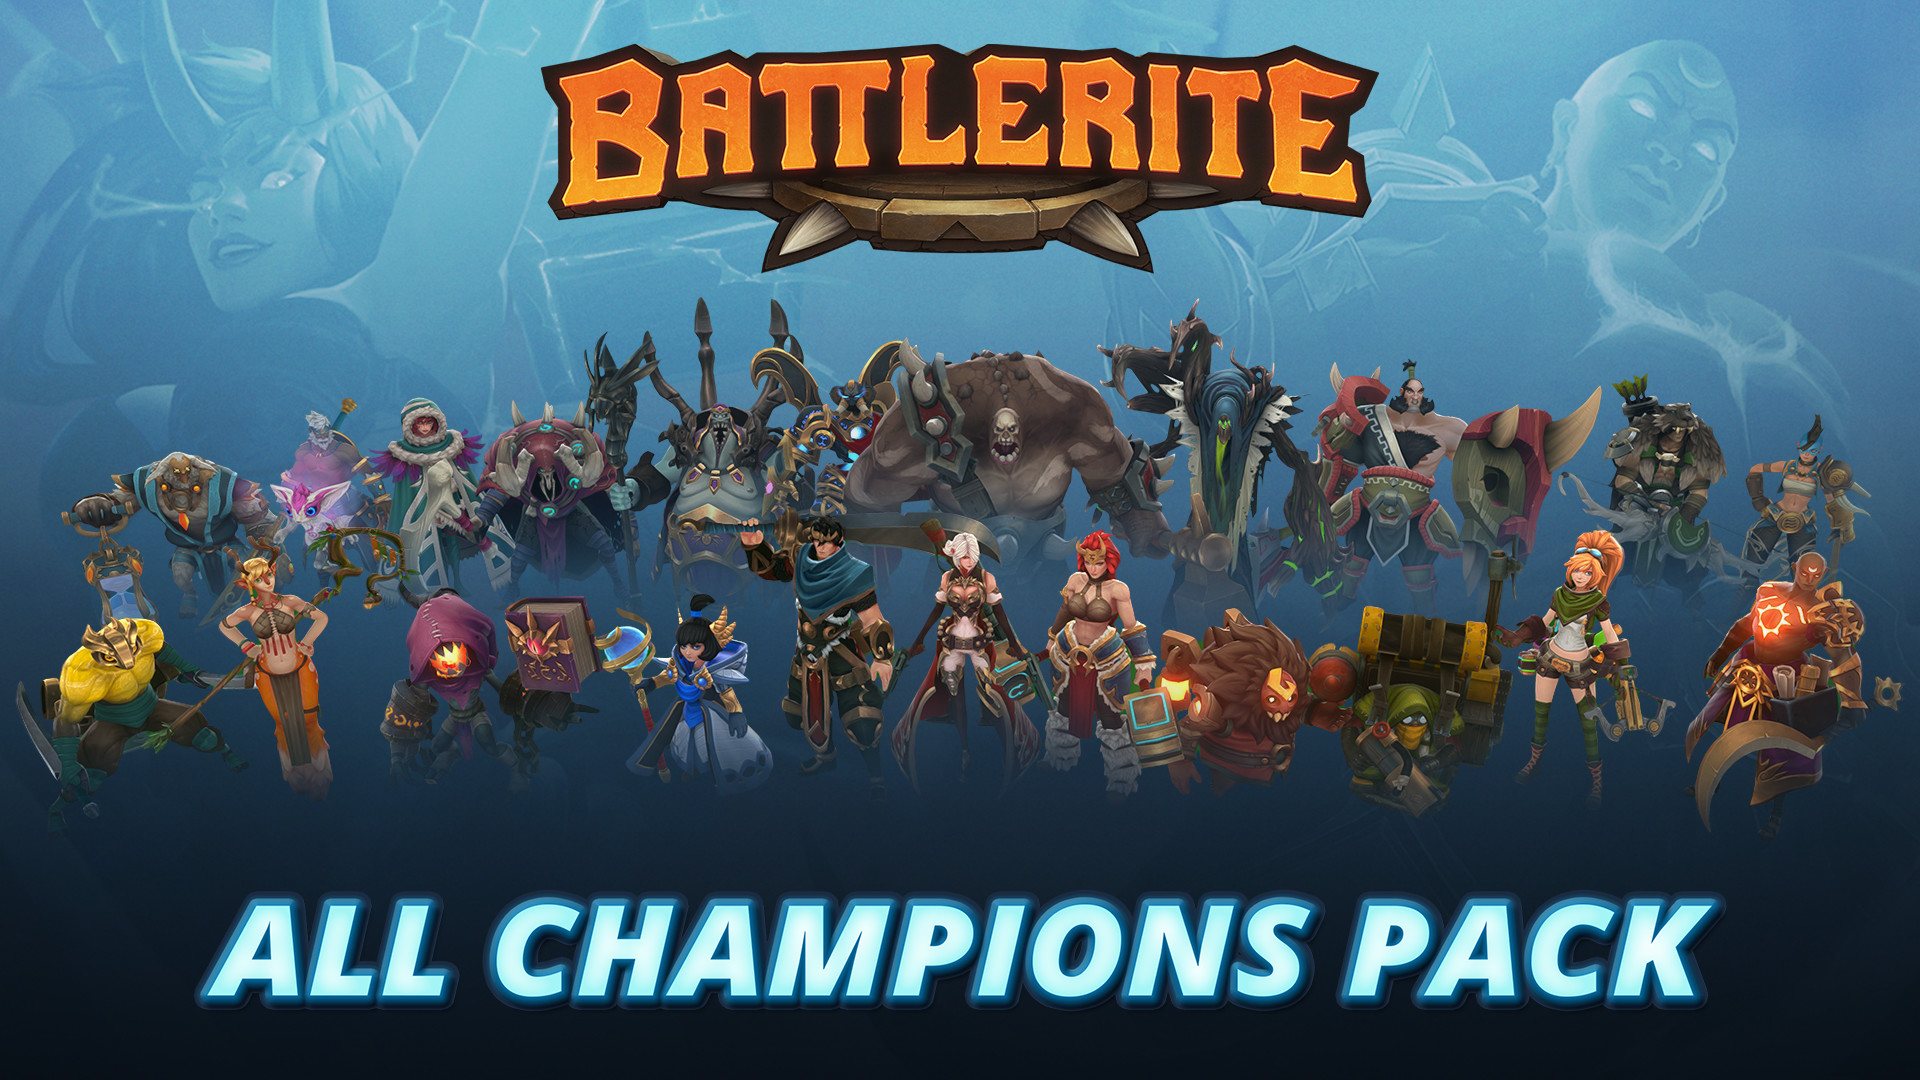 Battlerite - All Champions Pack Steam CD Key